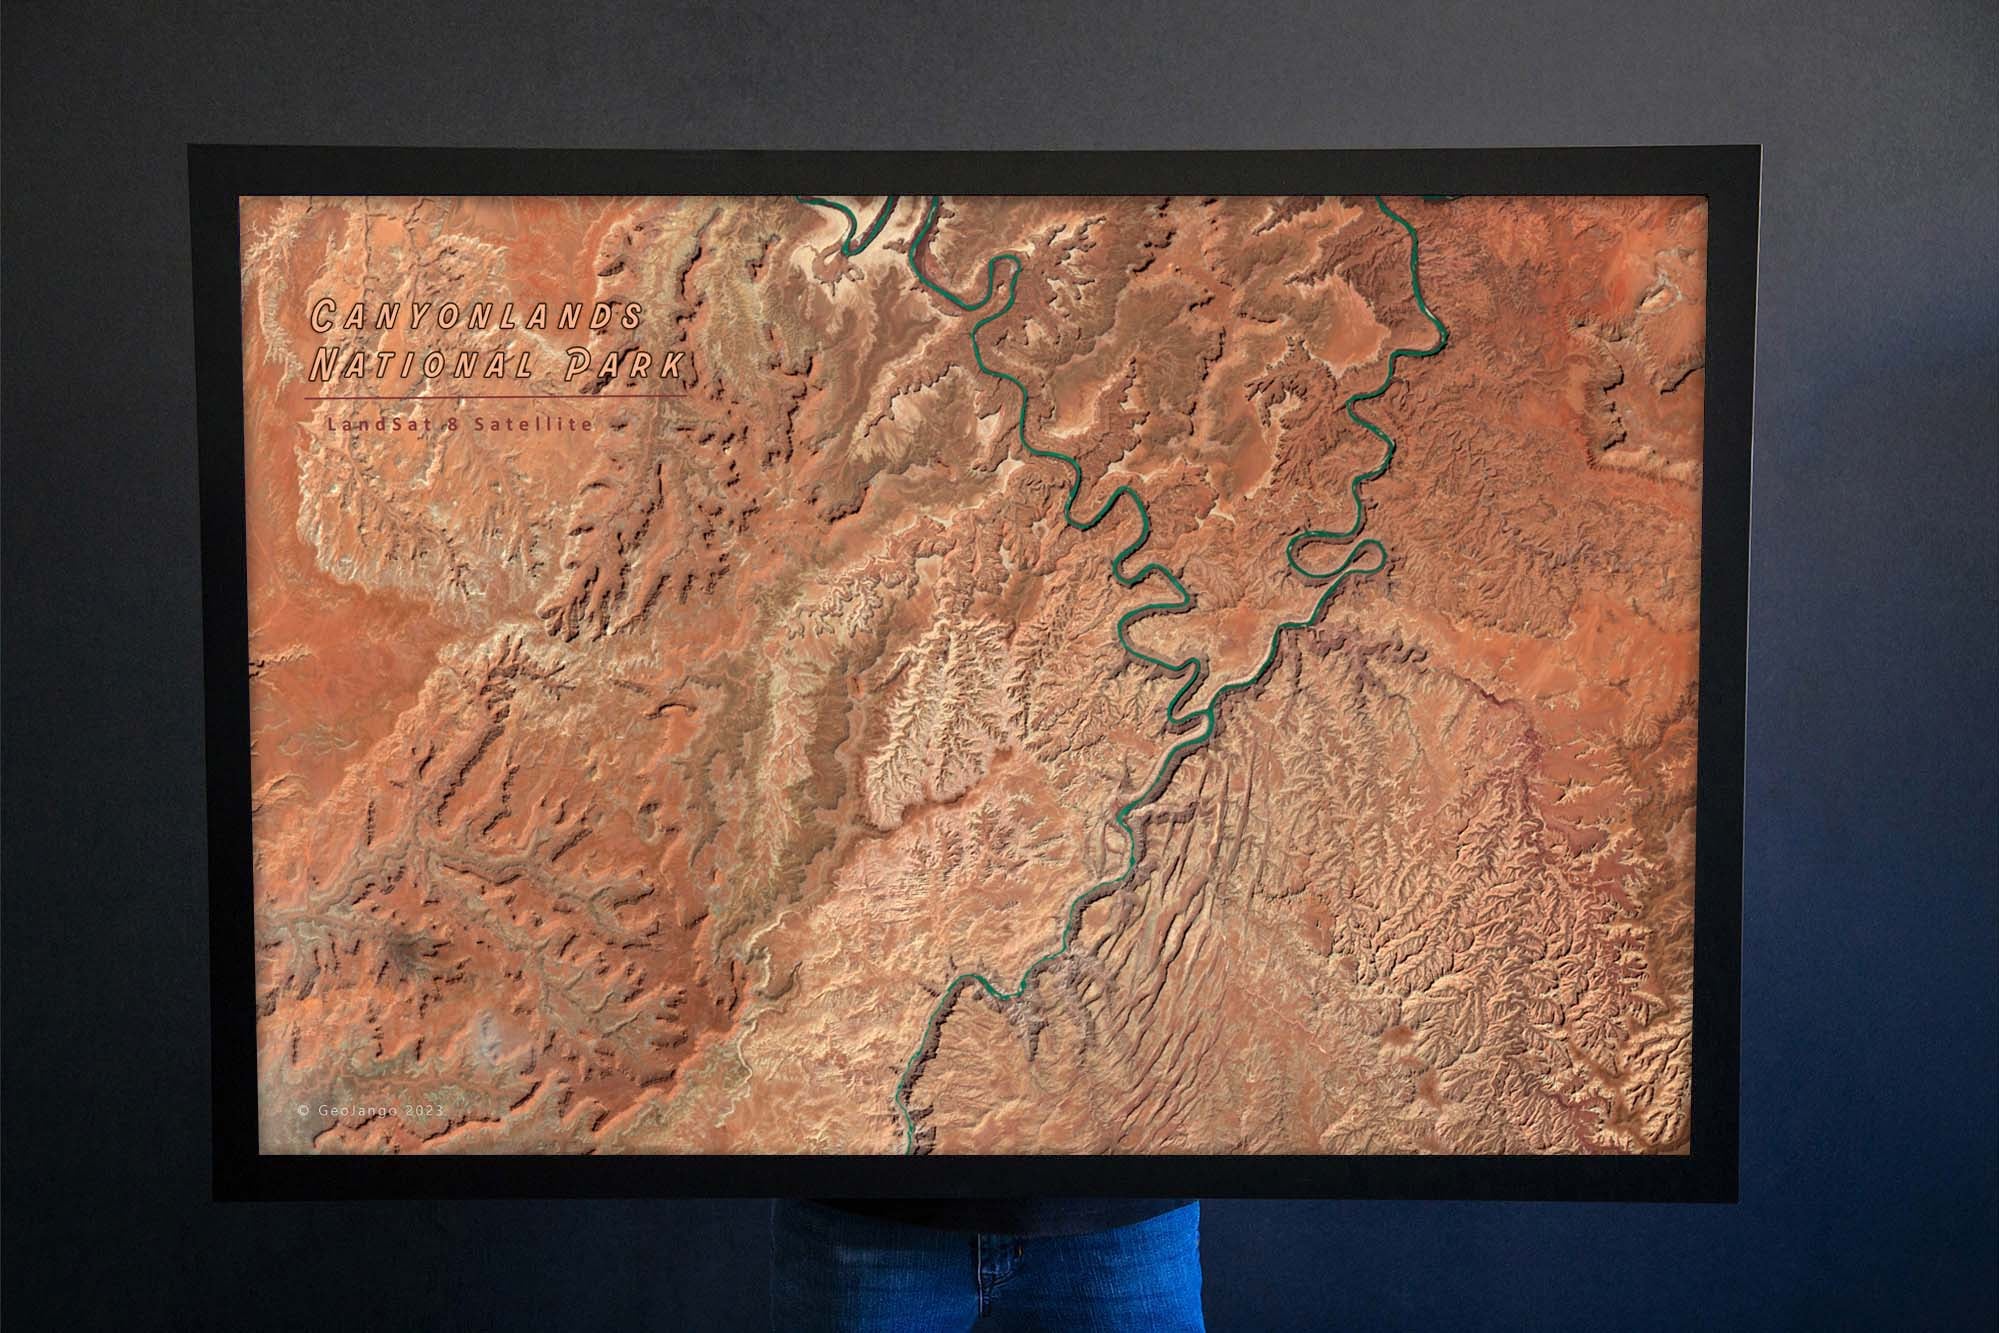 National park satellite map